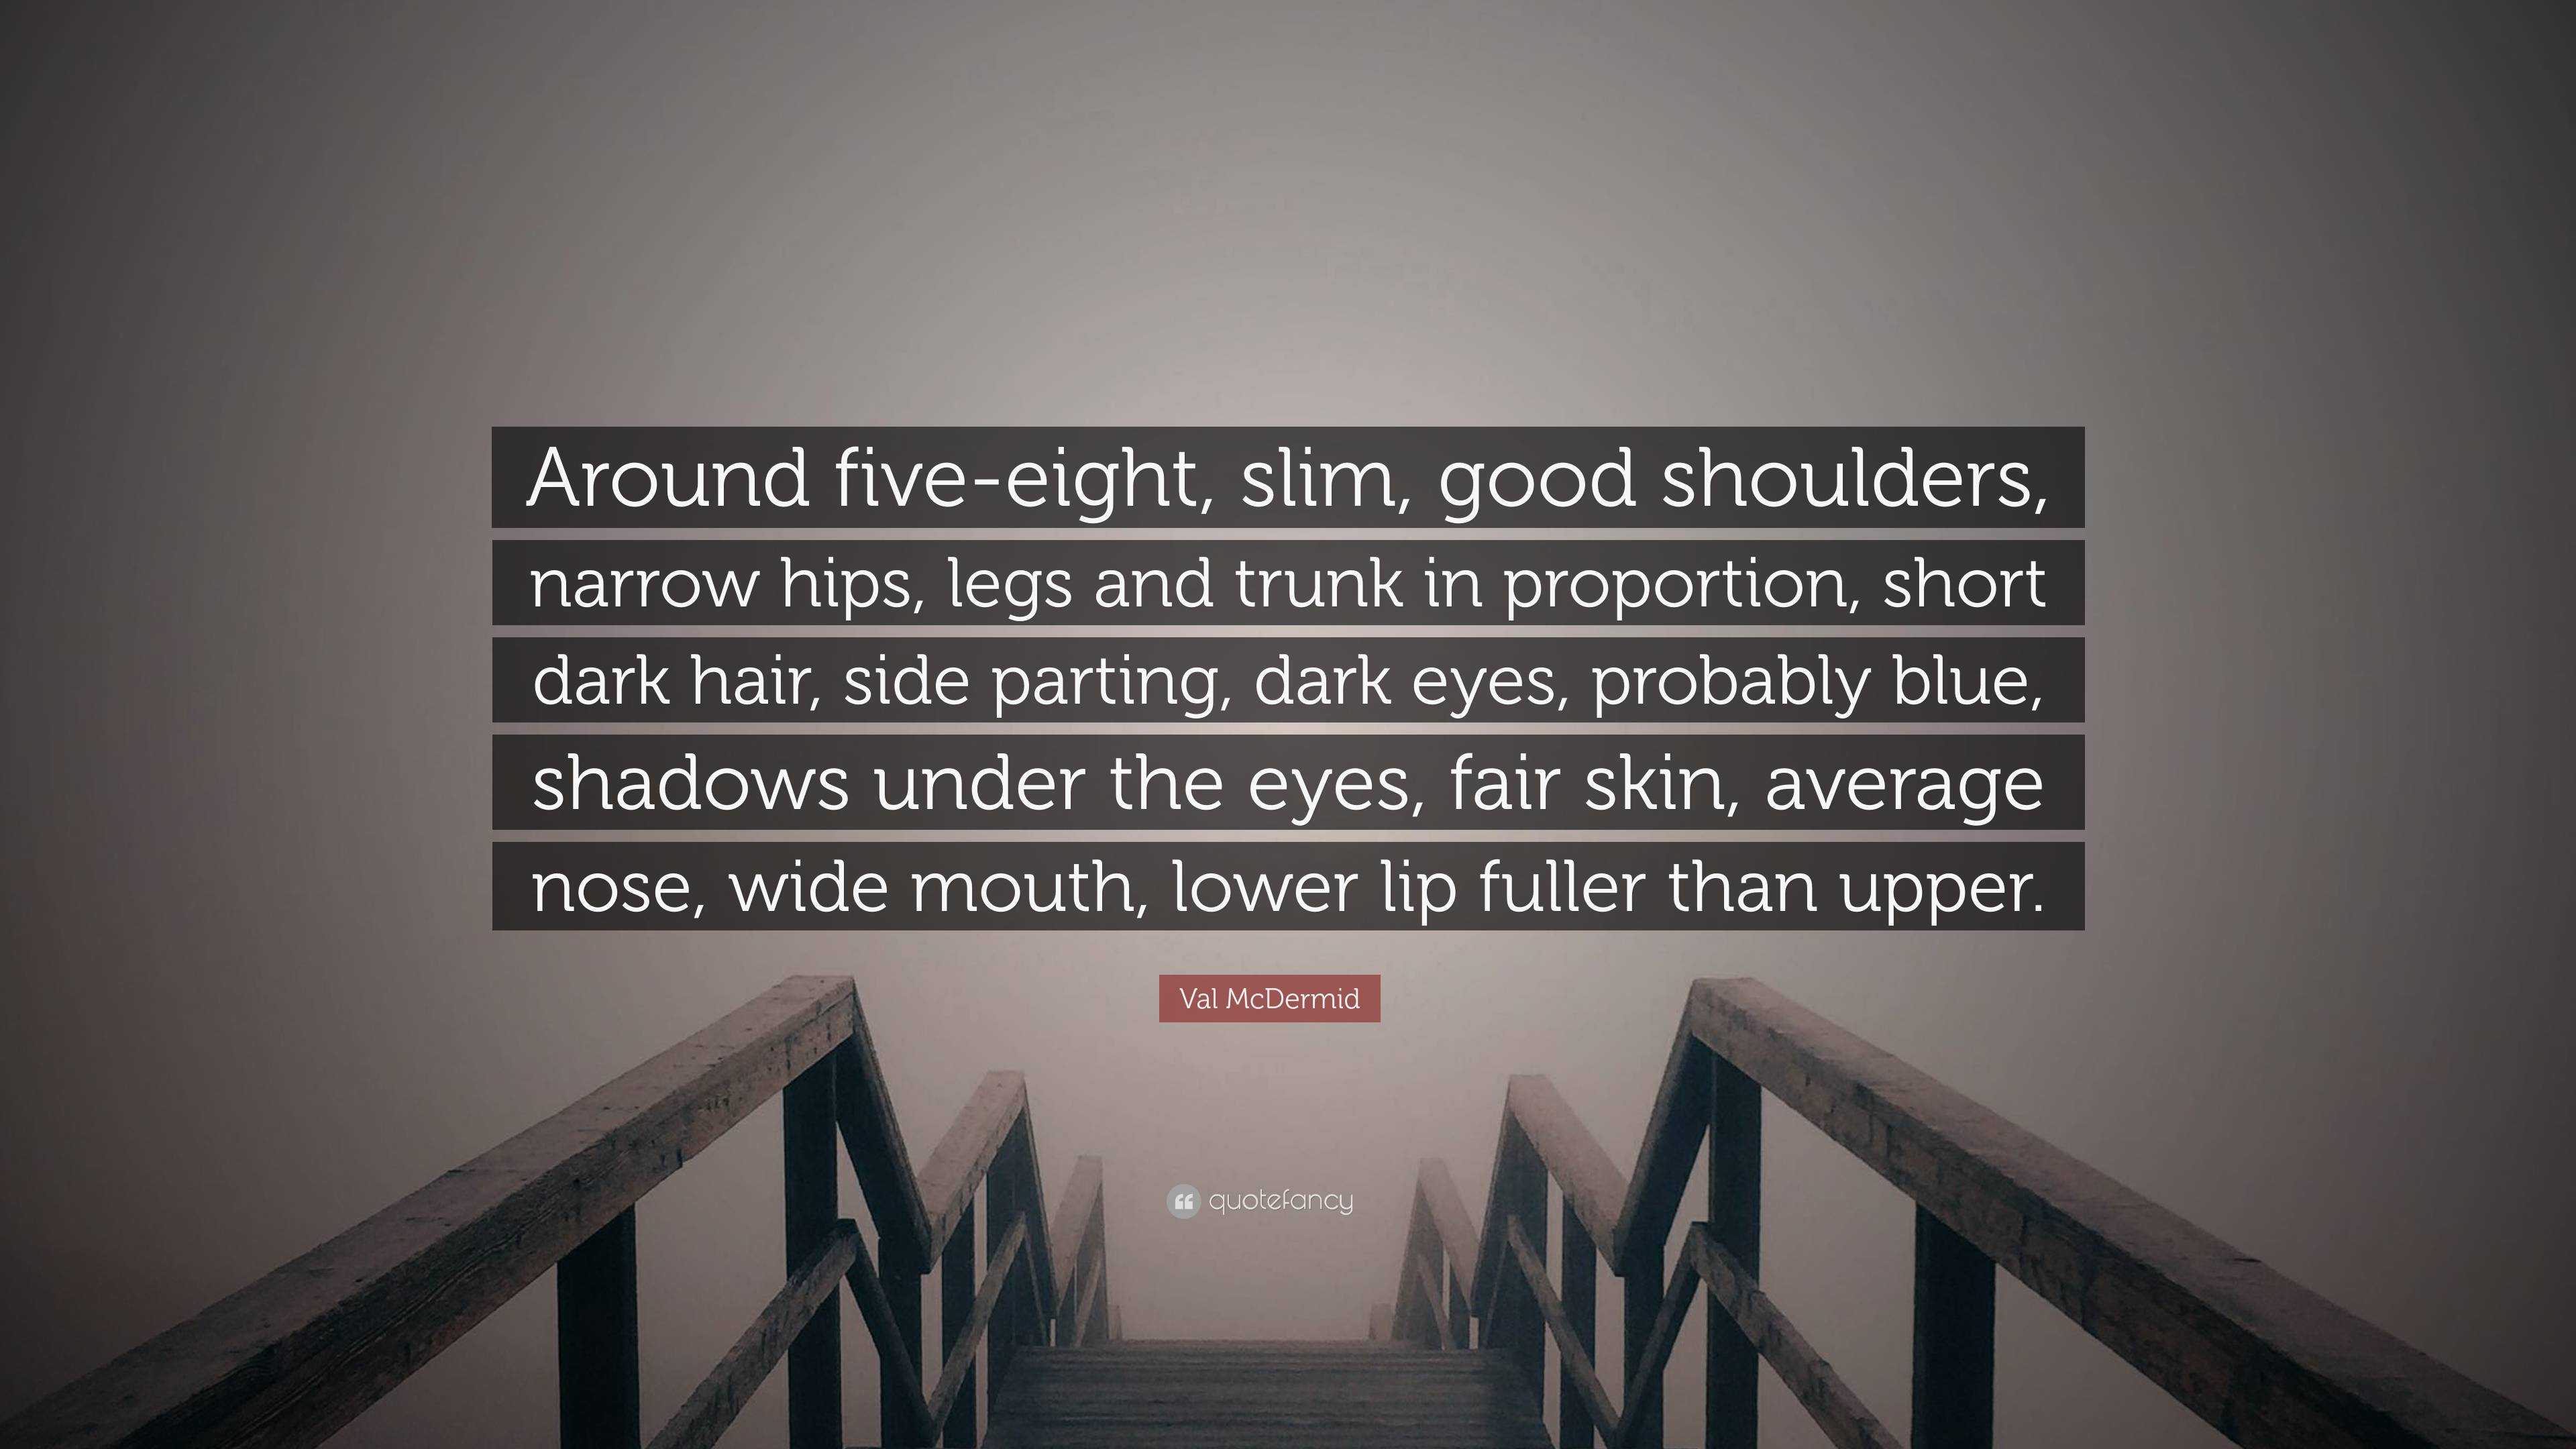 Val McDermid Quote: “Around five-eight, slim, good shoulders